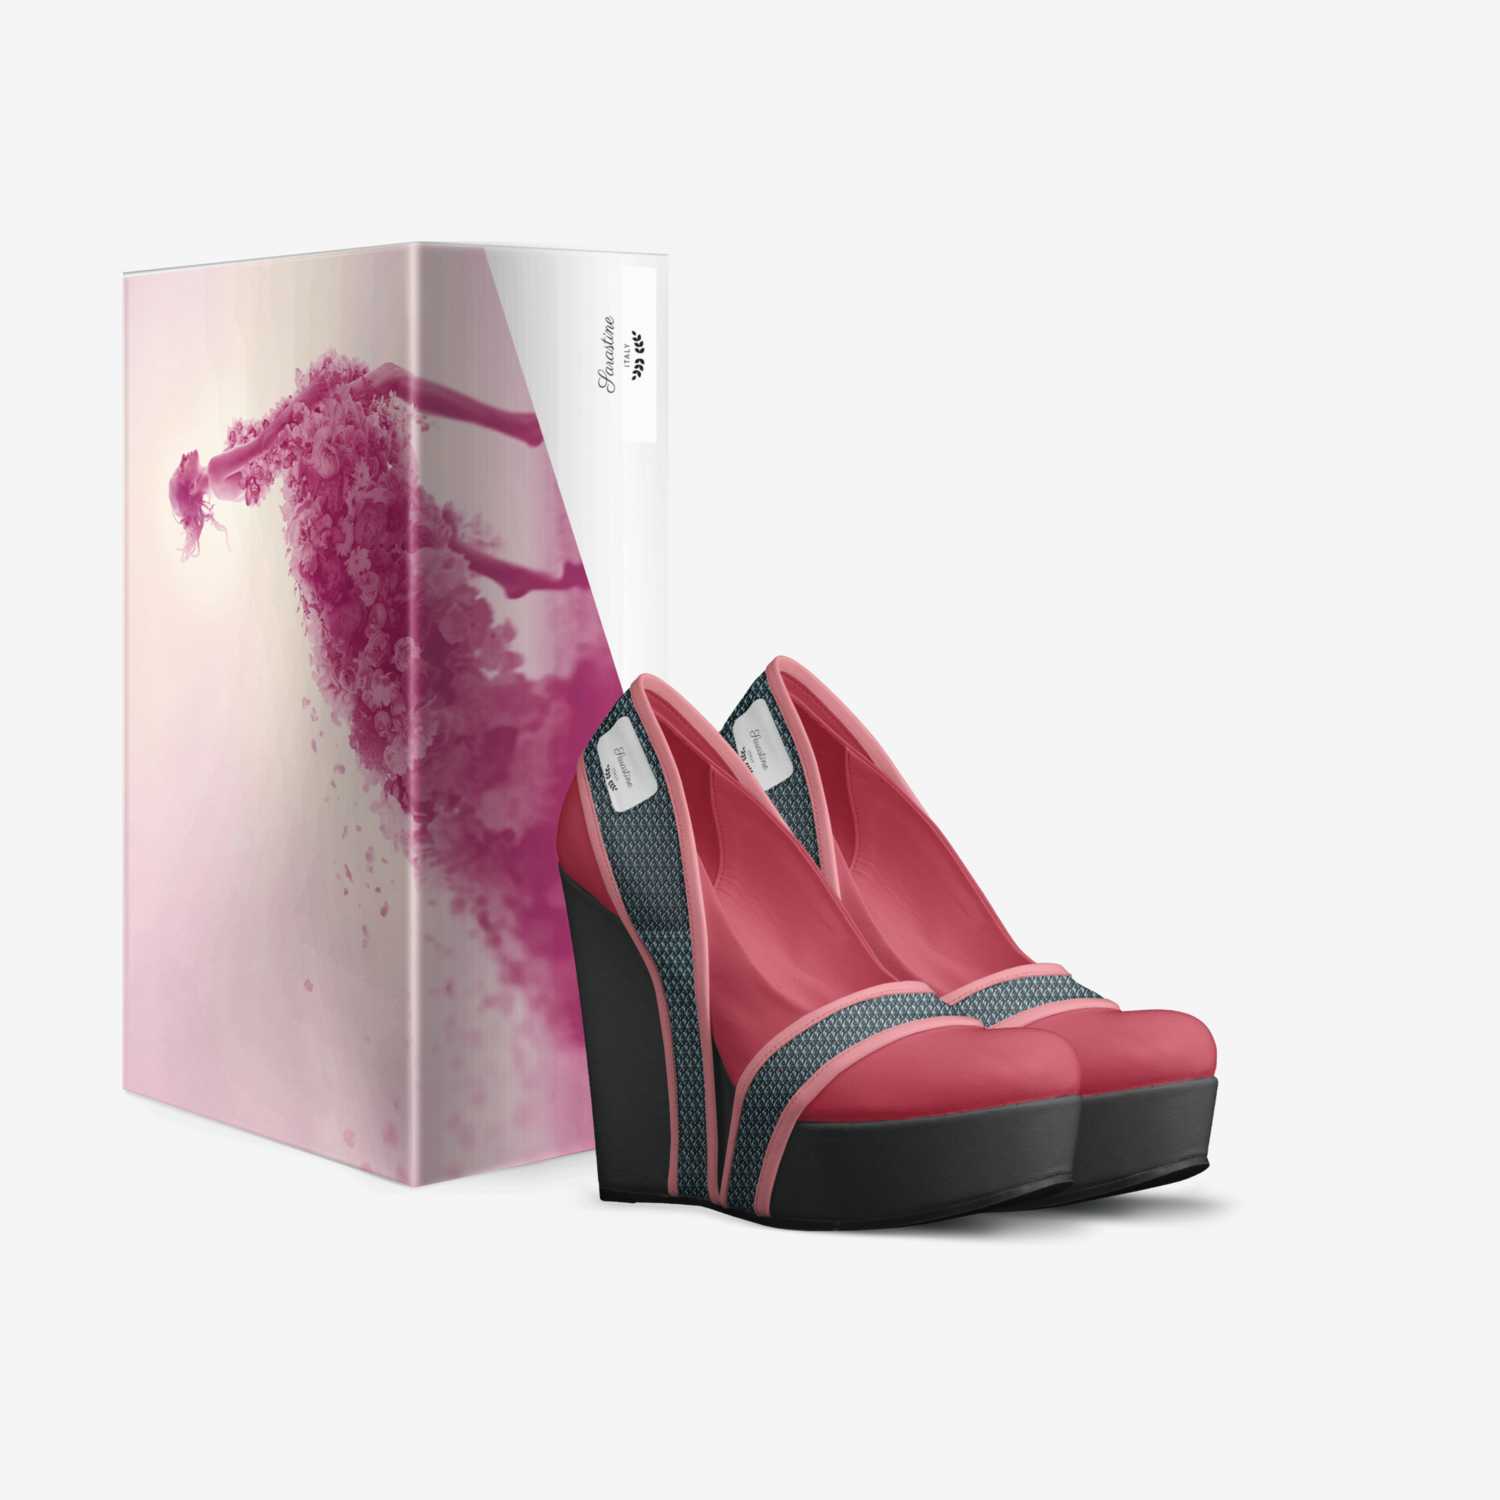 Sarastine custom made in Italy shoes by Sarastine Richey | Box view